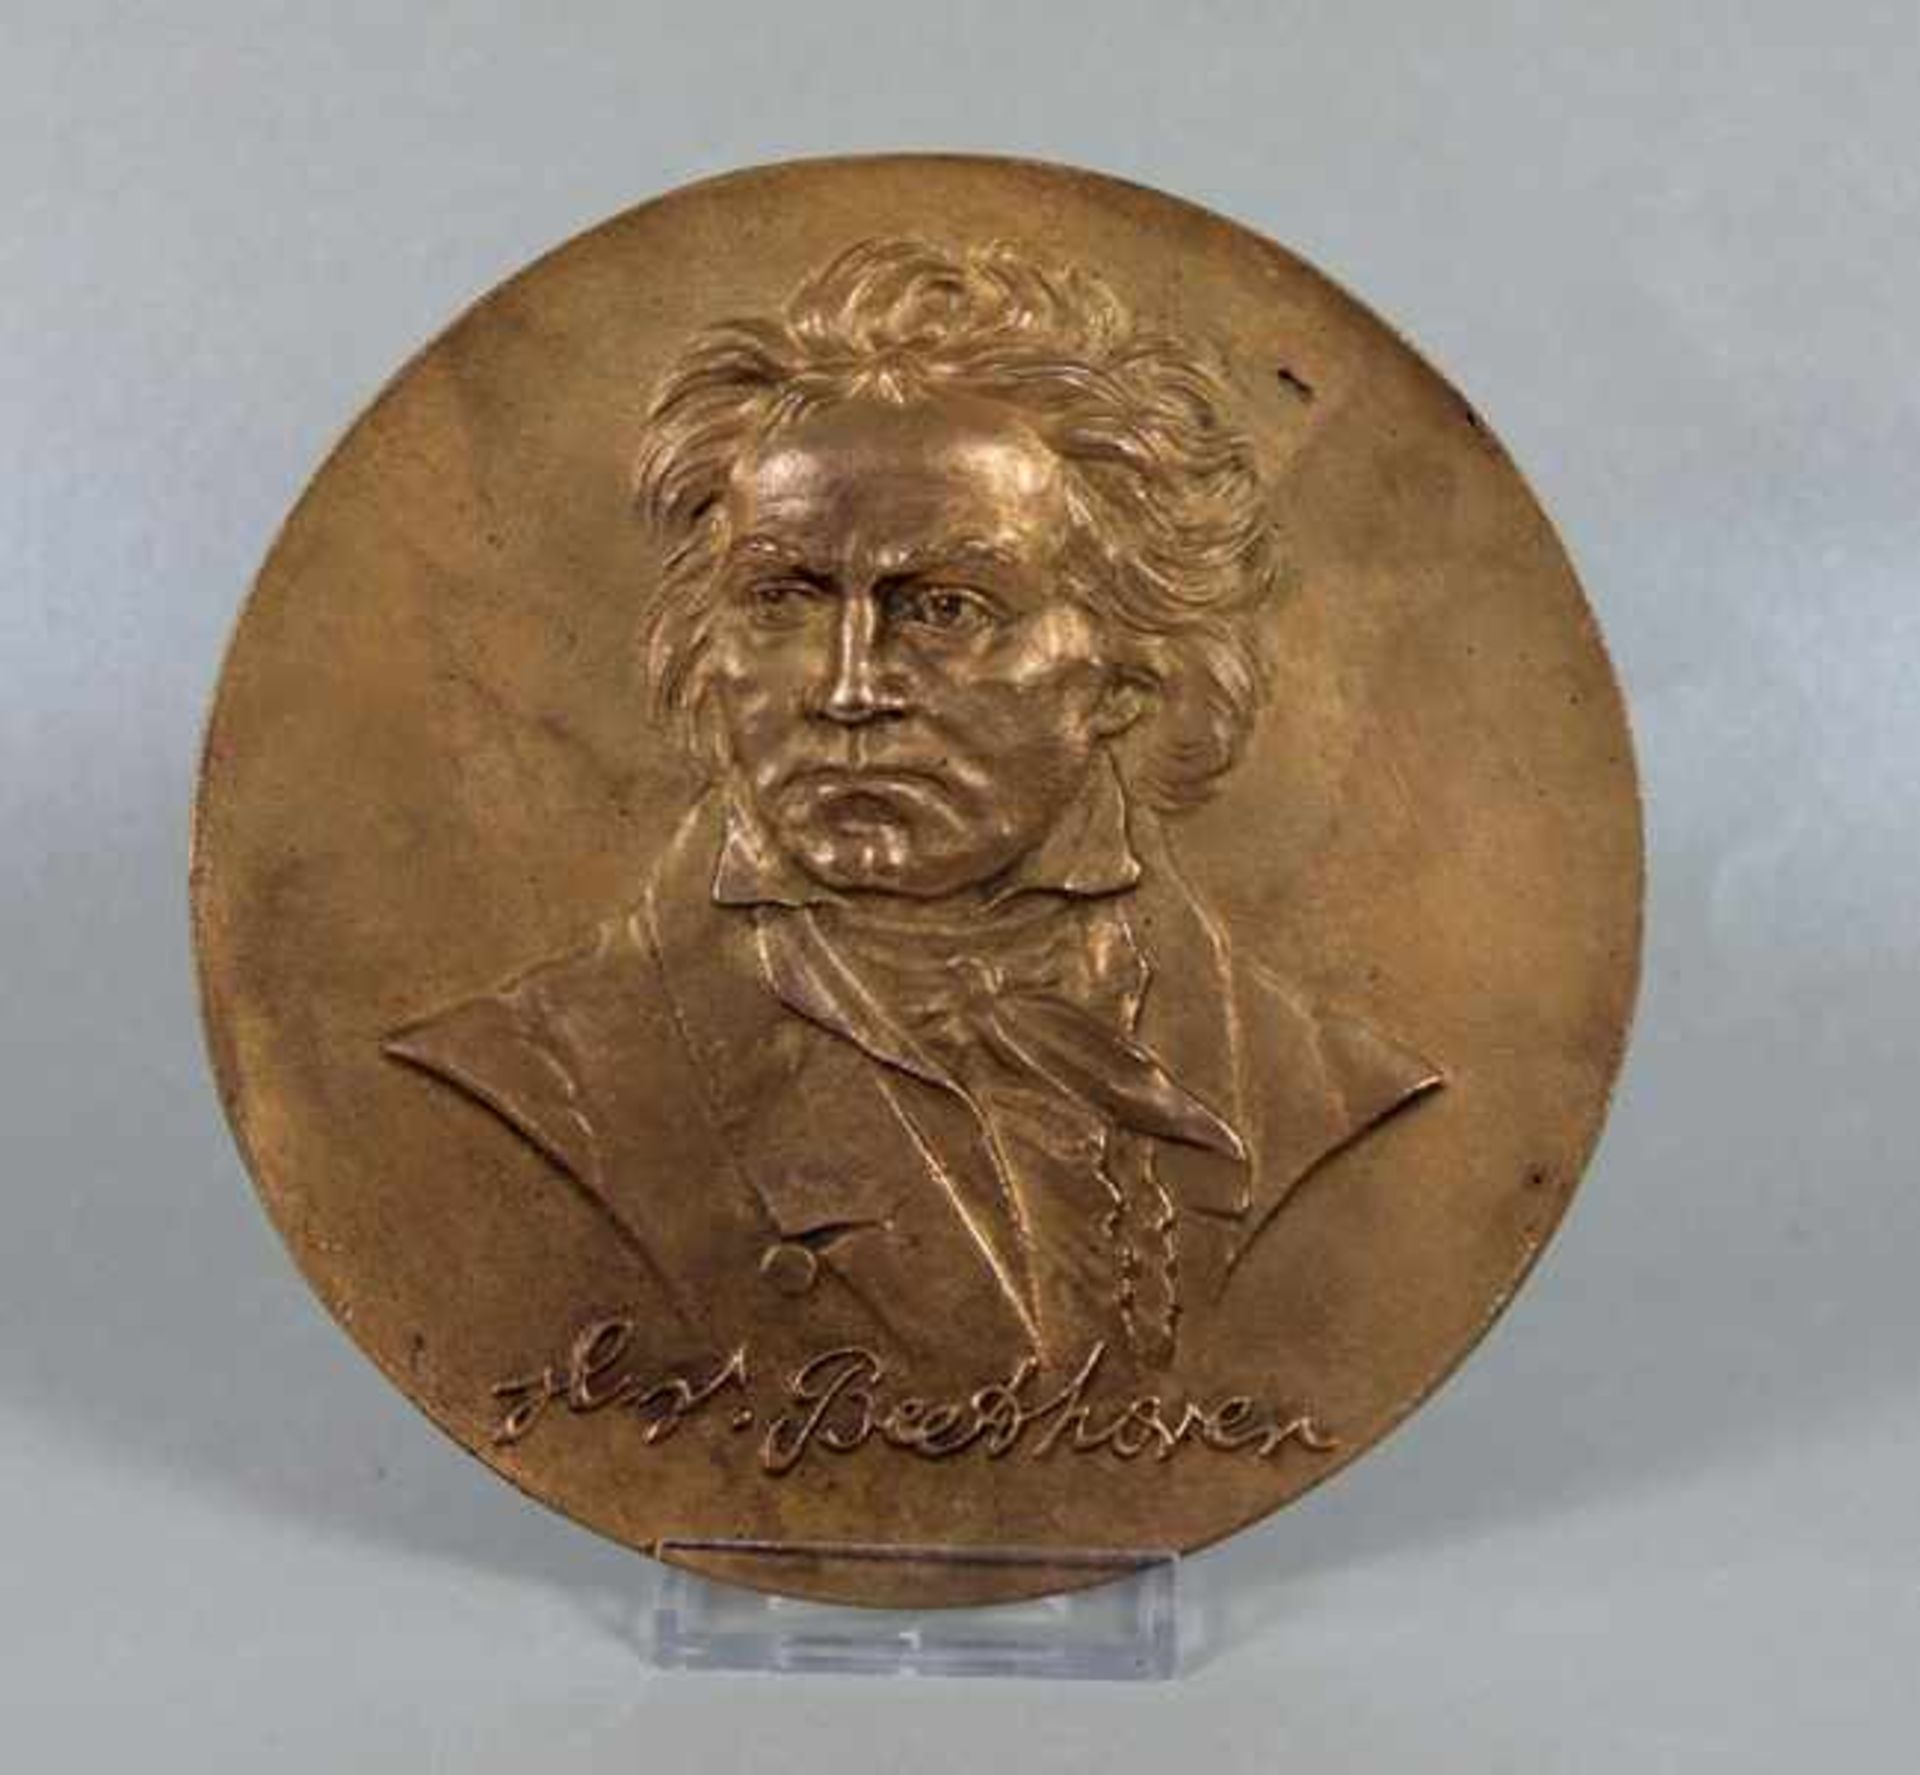 Beethoven-Plaketterunde Bronzeplakette mit Relief u. Name Beethovens, Gebr.sp., D. 16